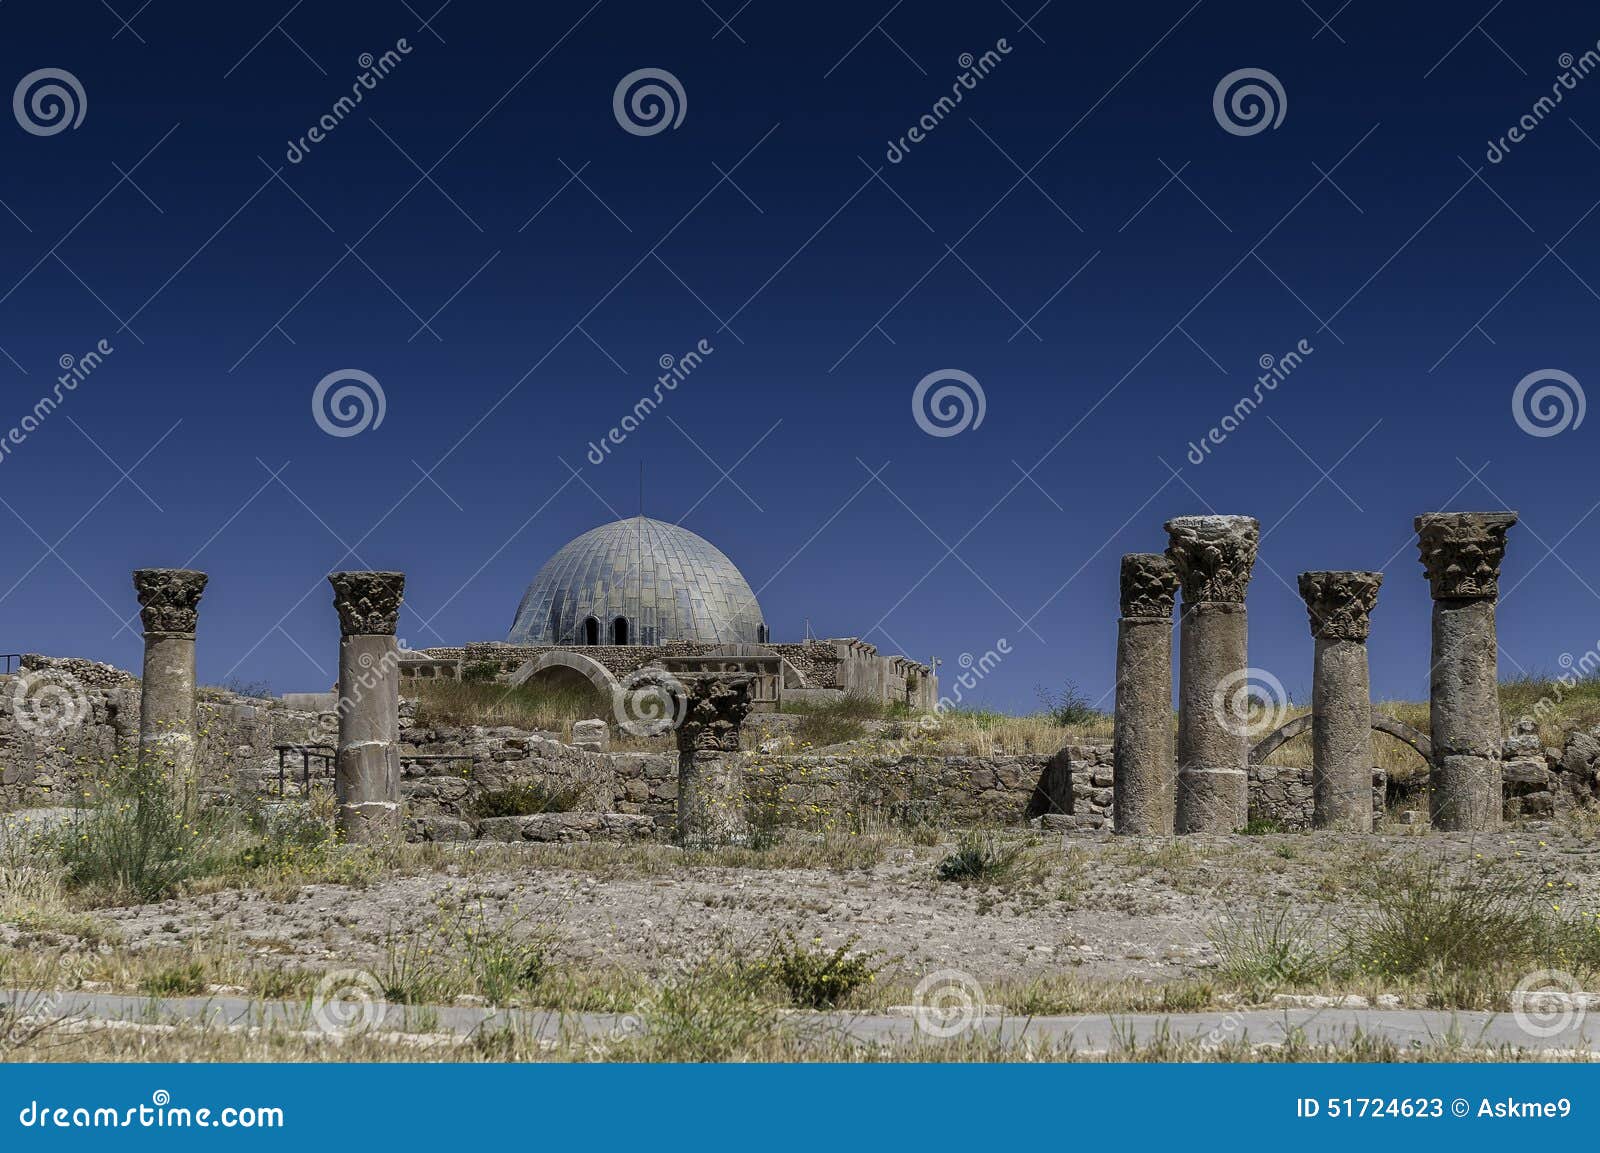 the umayyad palace in amman, jordan